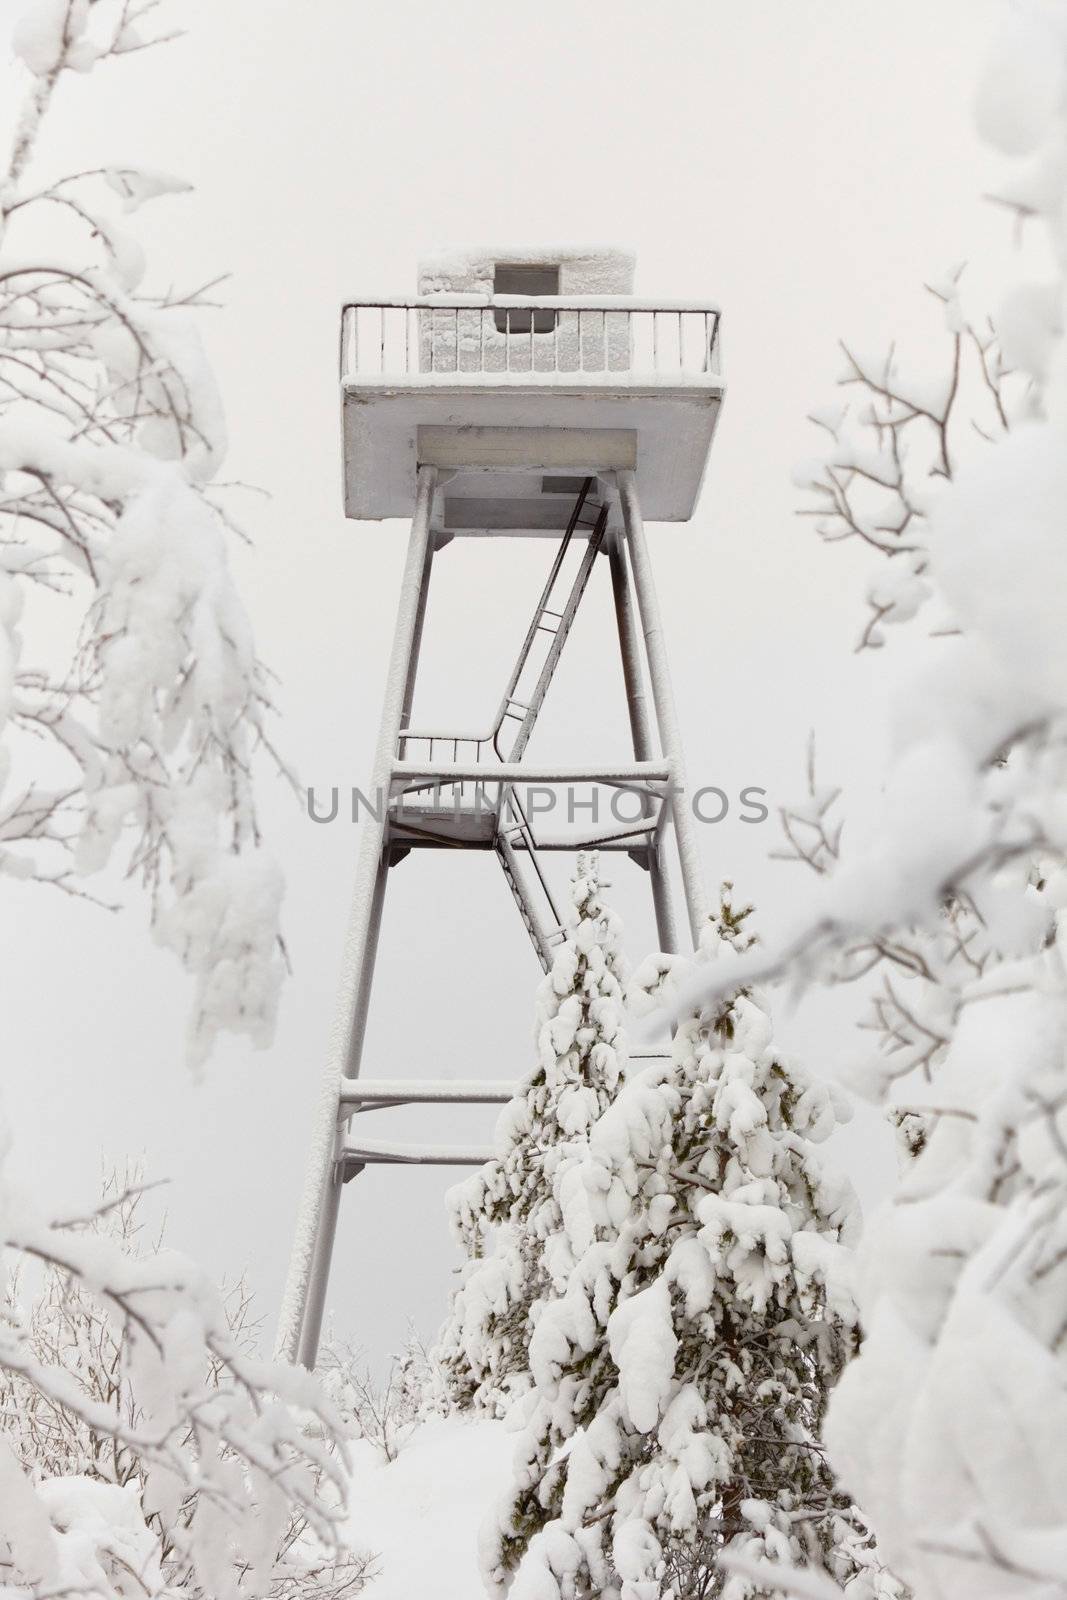 Winter landscape - the old prison watchtower